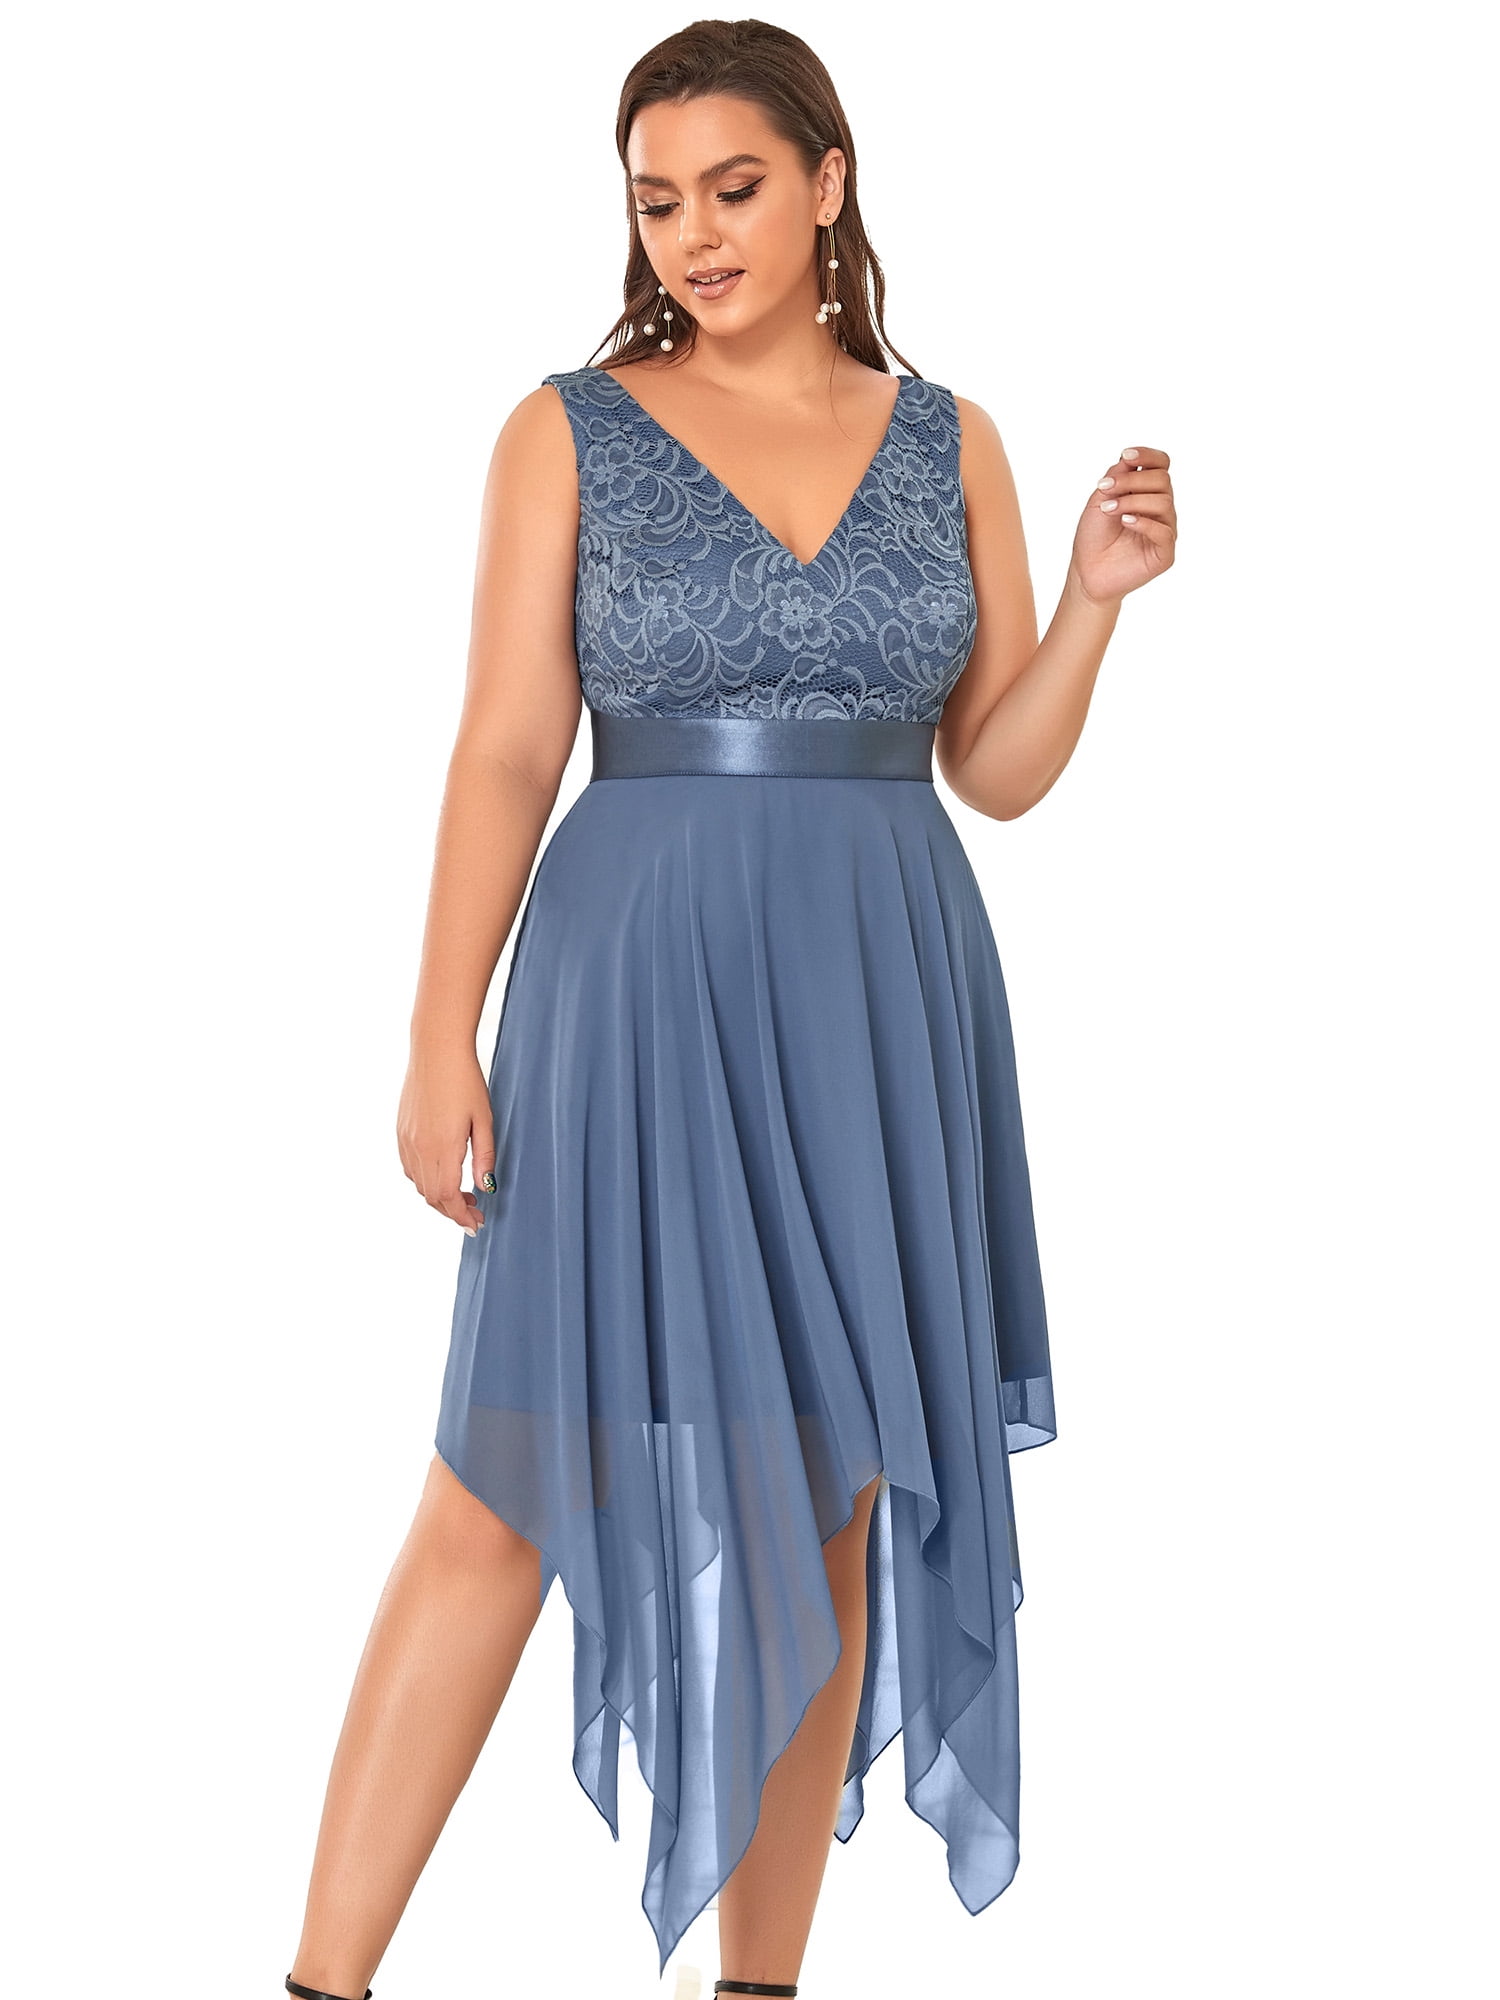 Ever-Pretty US V-neck Evening Dresses Applique Lace Cocktail Gowns A-Line 07706